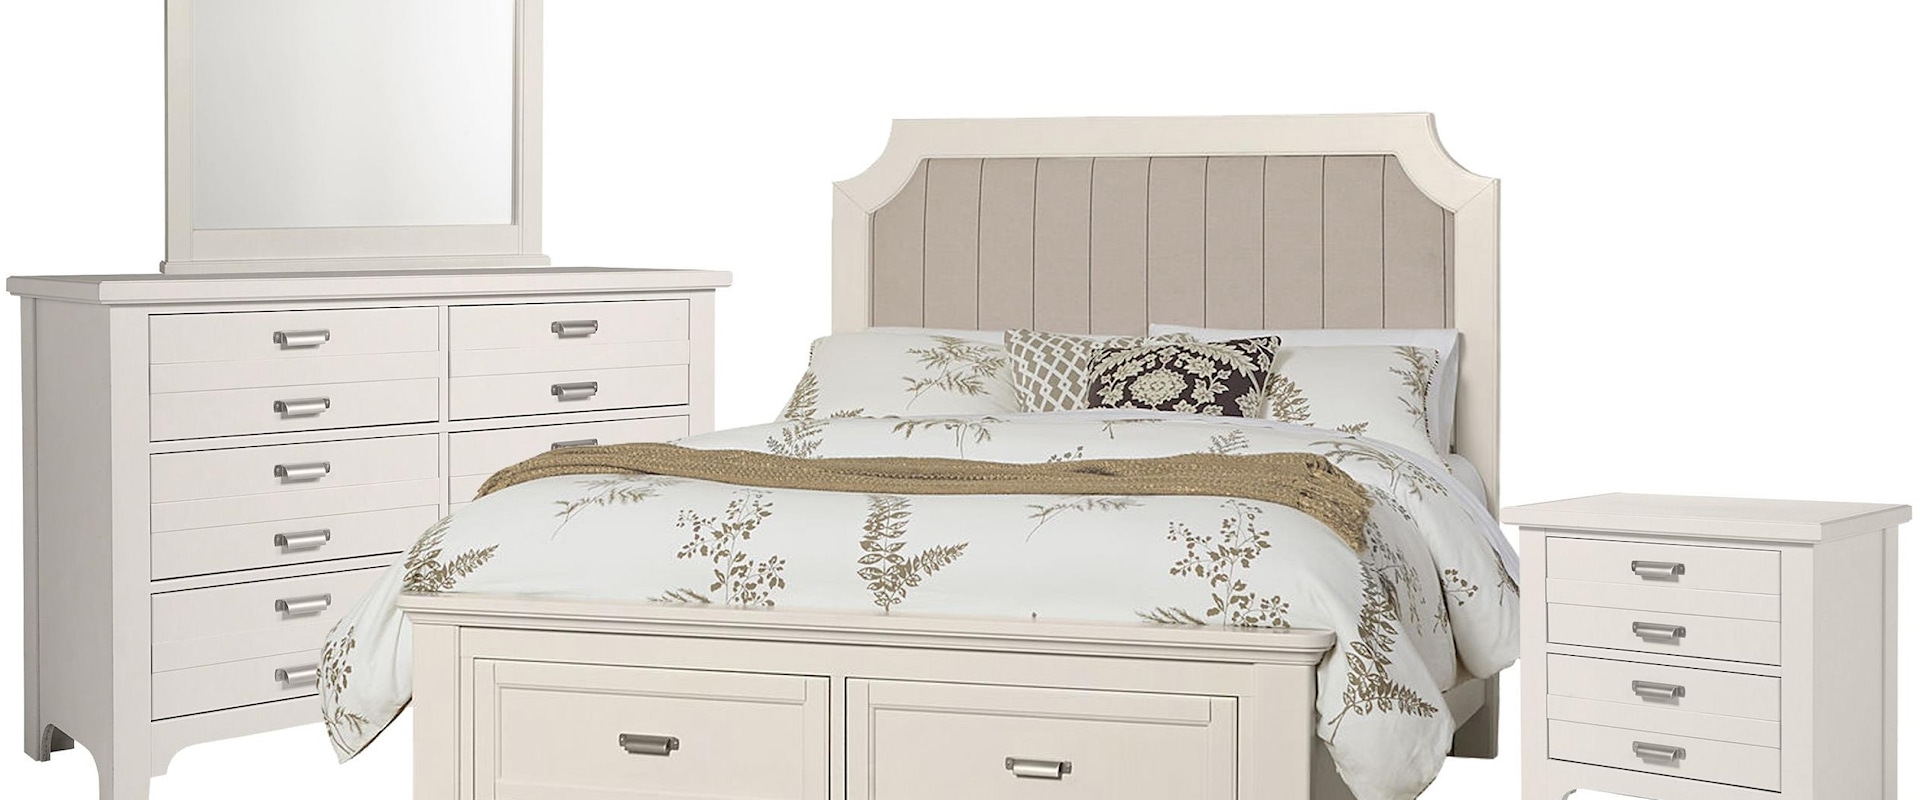 King Upholstered Storage Bed, Double Dresser, Landscape Mirror, 2 Drawer Nightstand